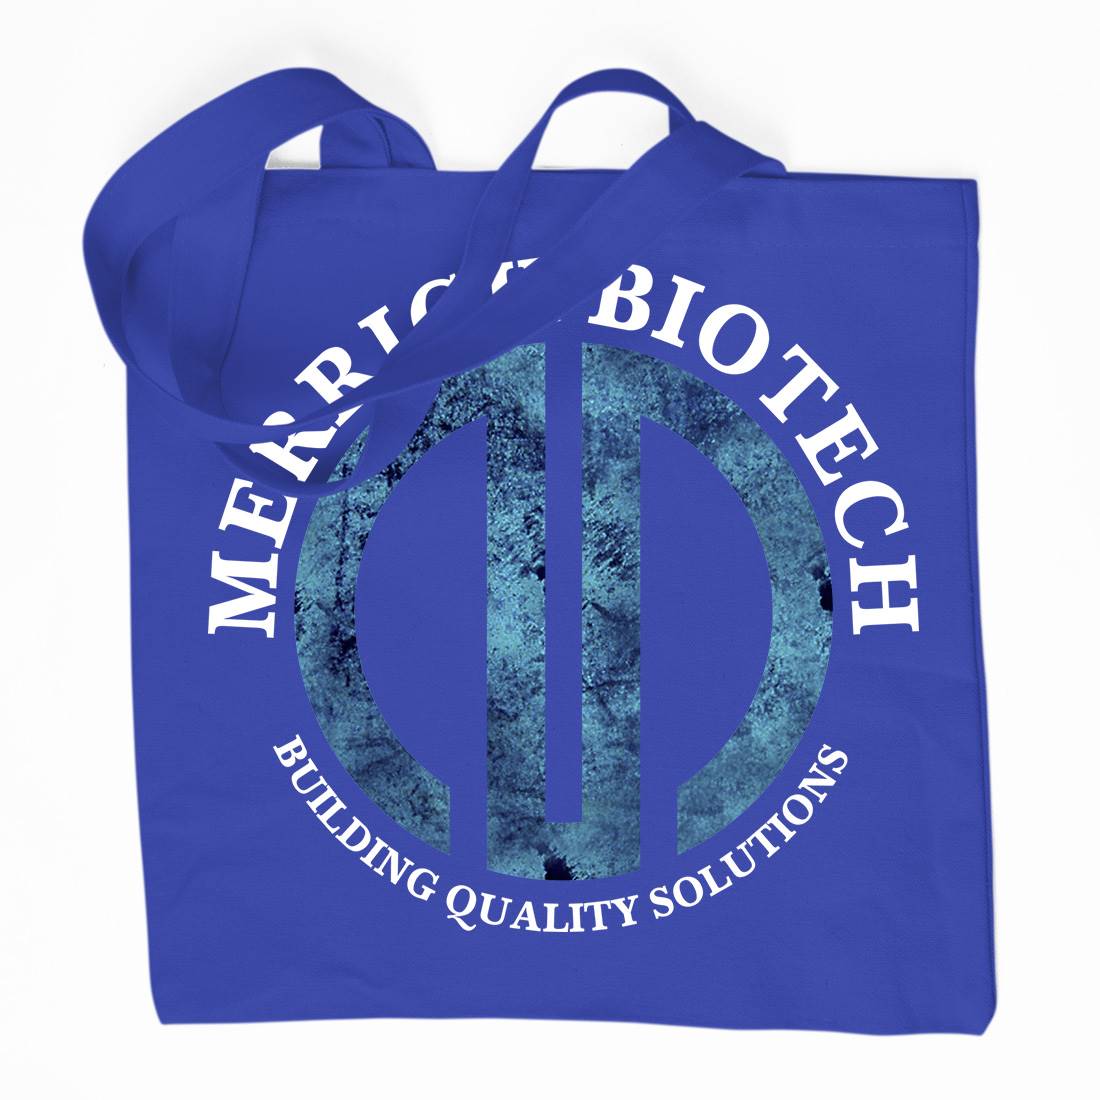 Merrick Biotech Organic Premium Cotton Tote Bag Space D393